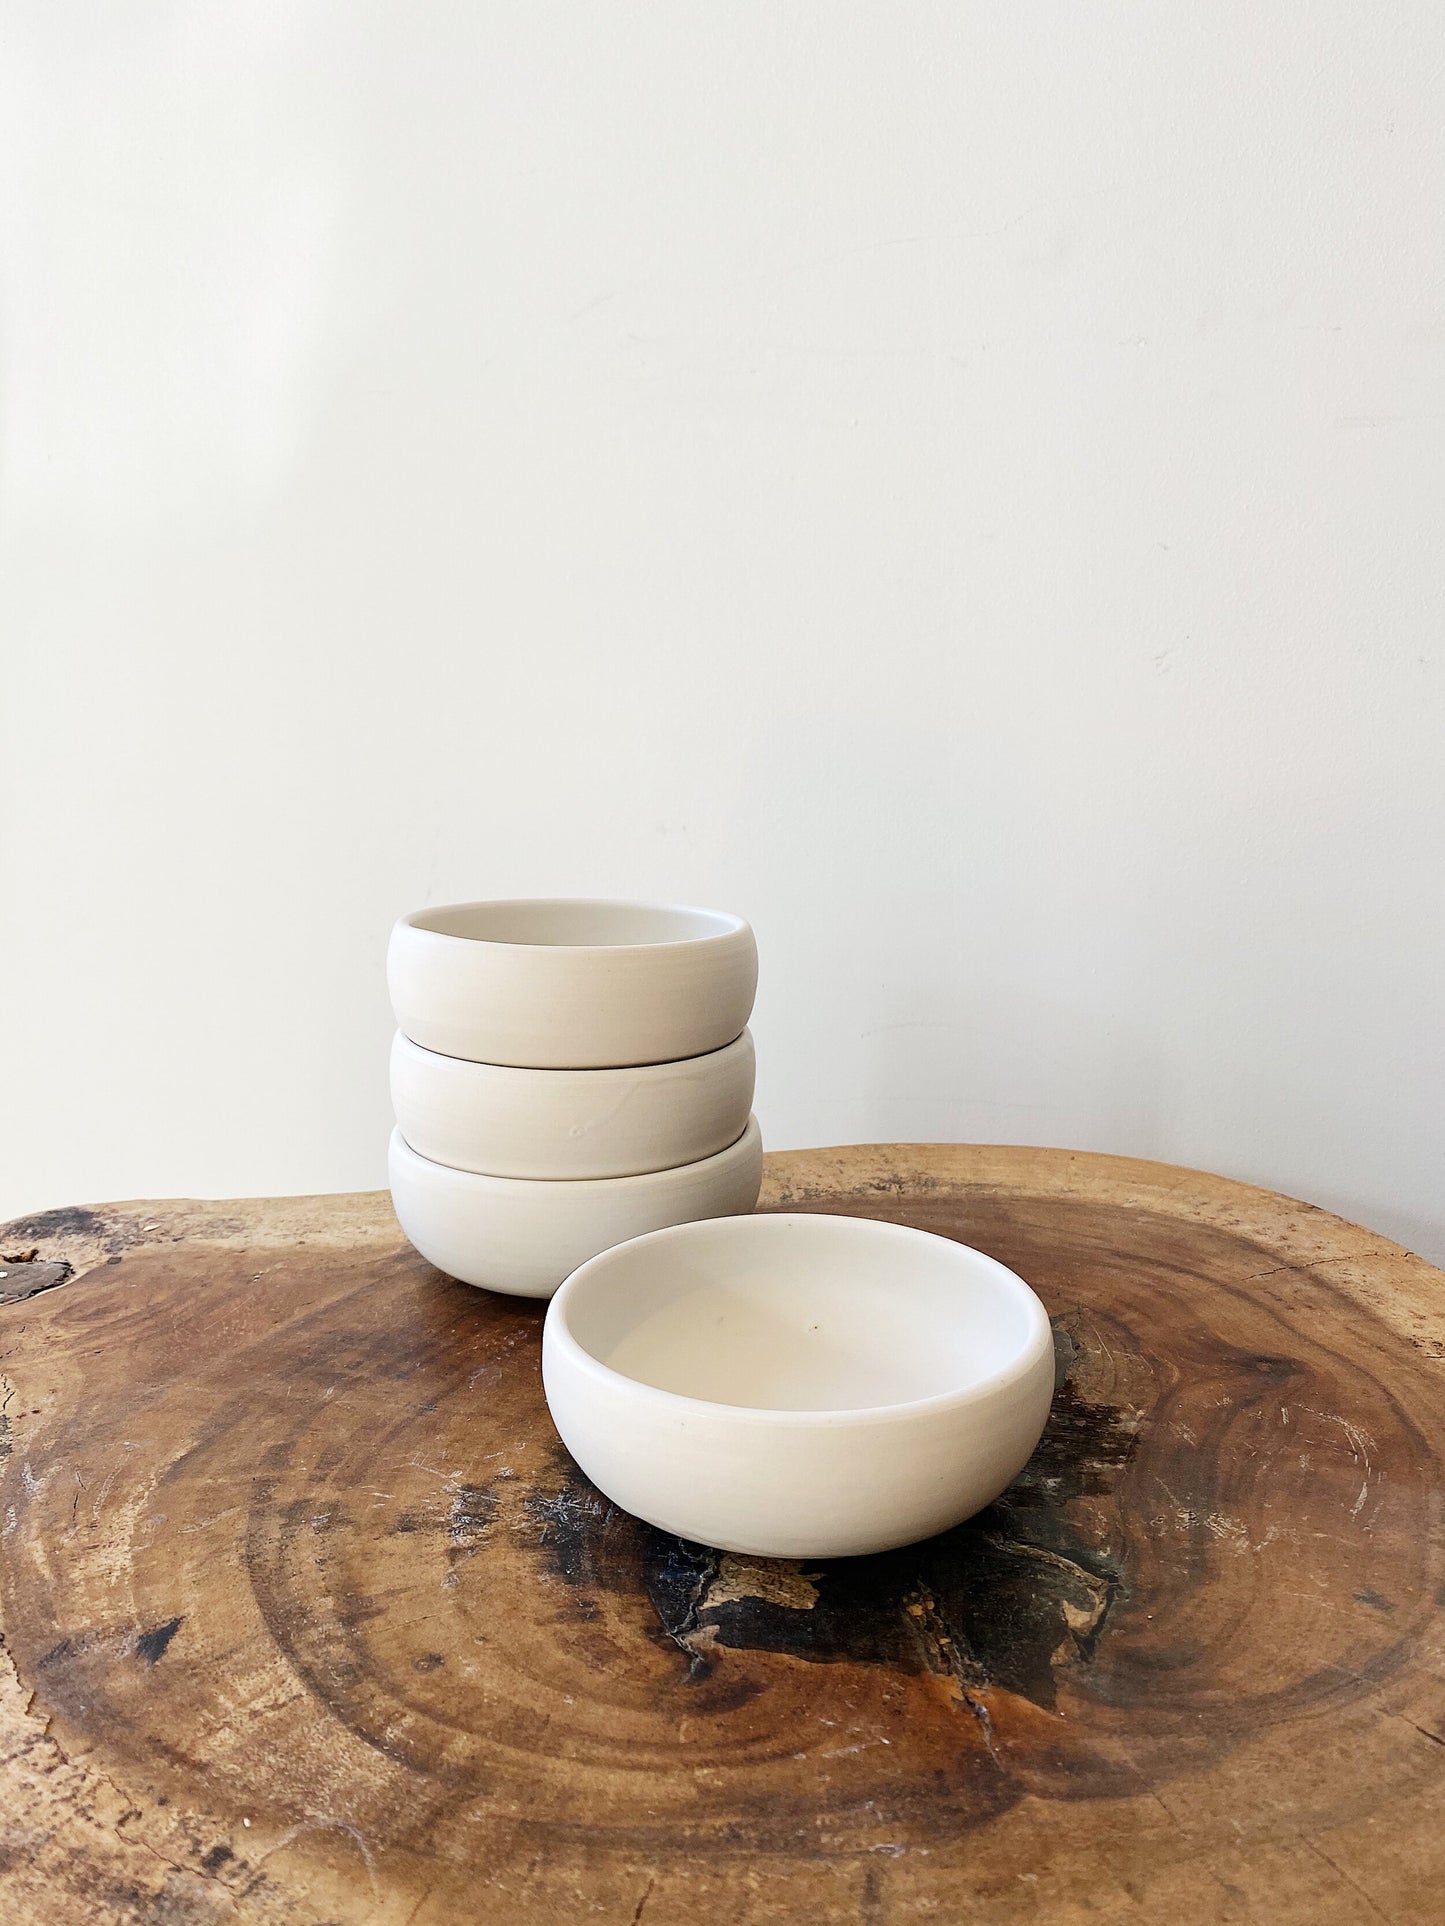 Charlotte Smith Ceramics: Porcelain ceramic bowls